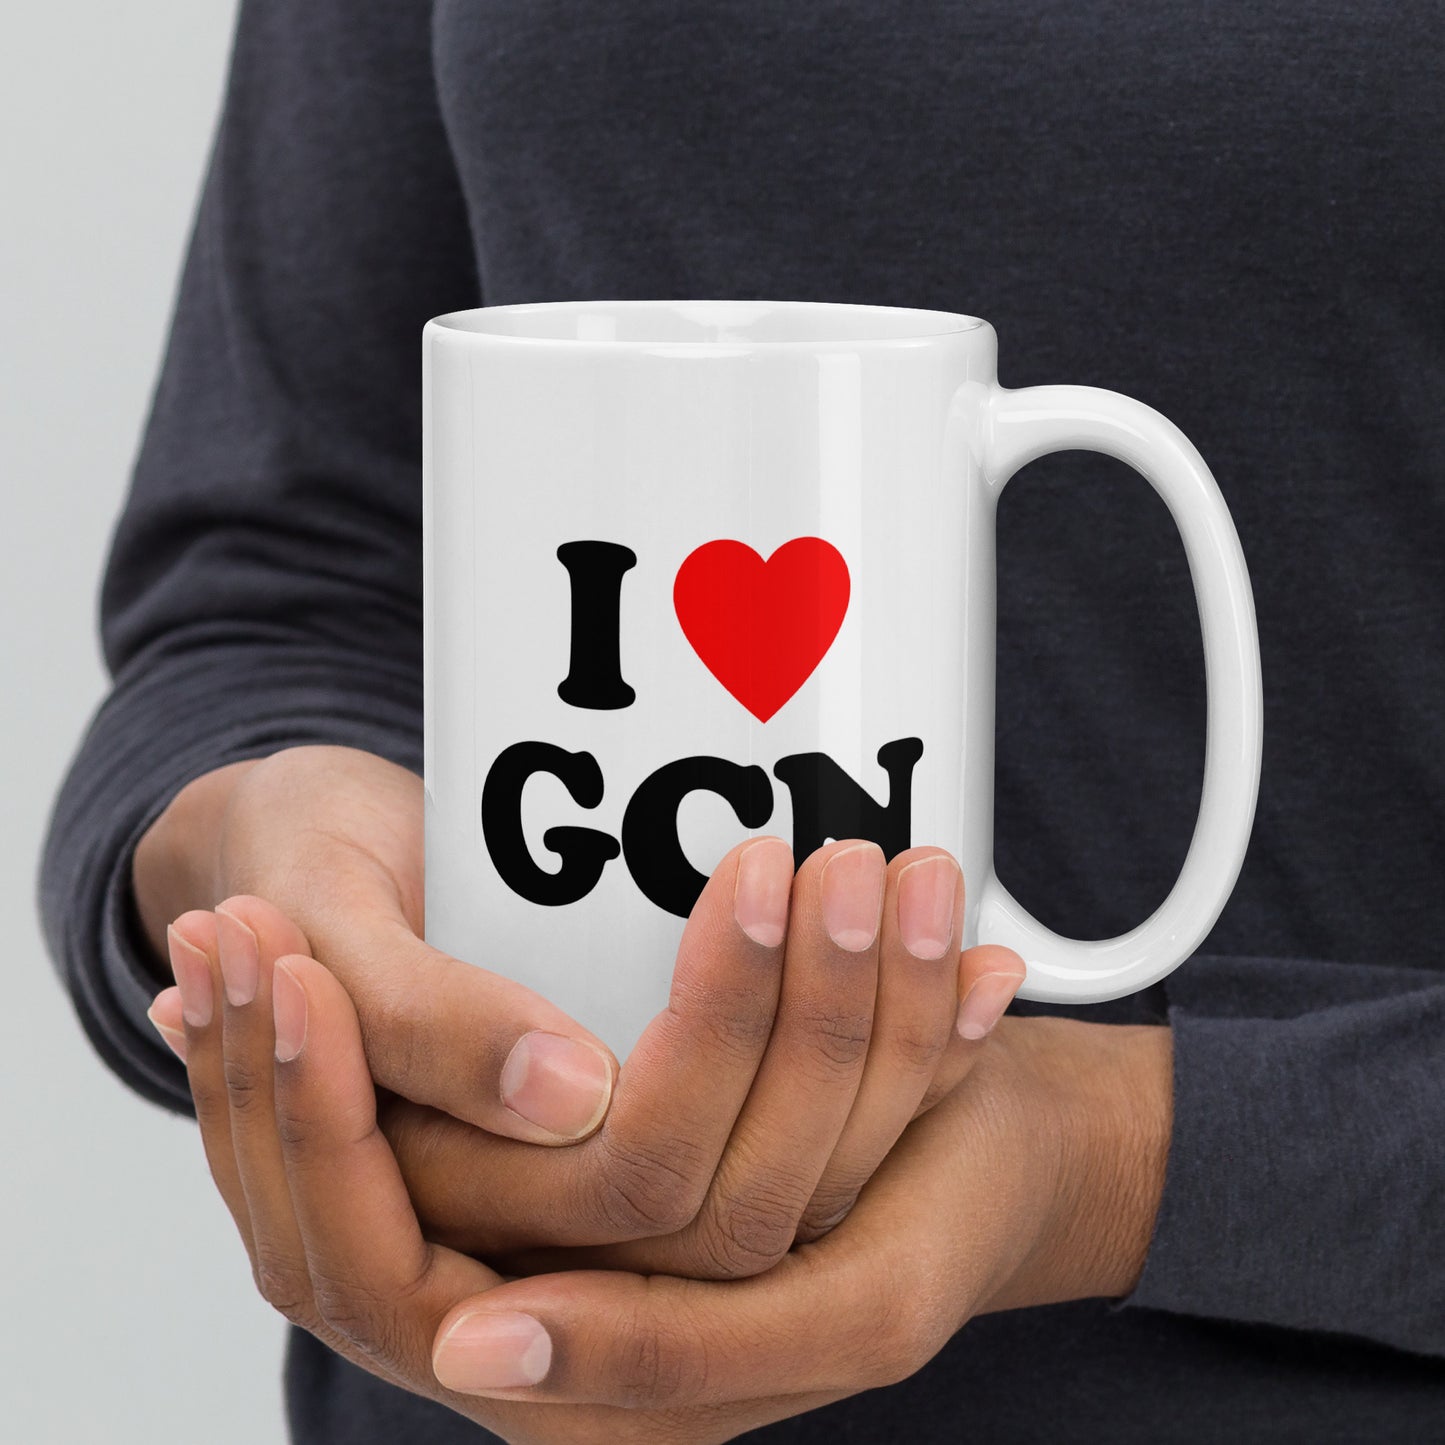 GOOD CAT - "I ❤️ GCN" White glossy mug